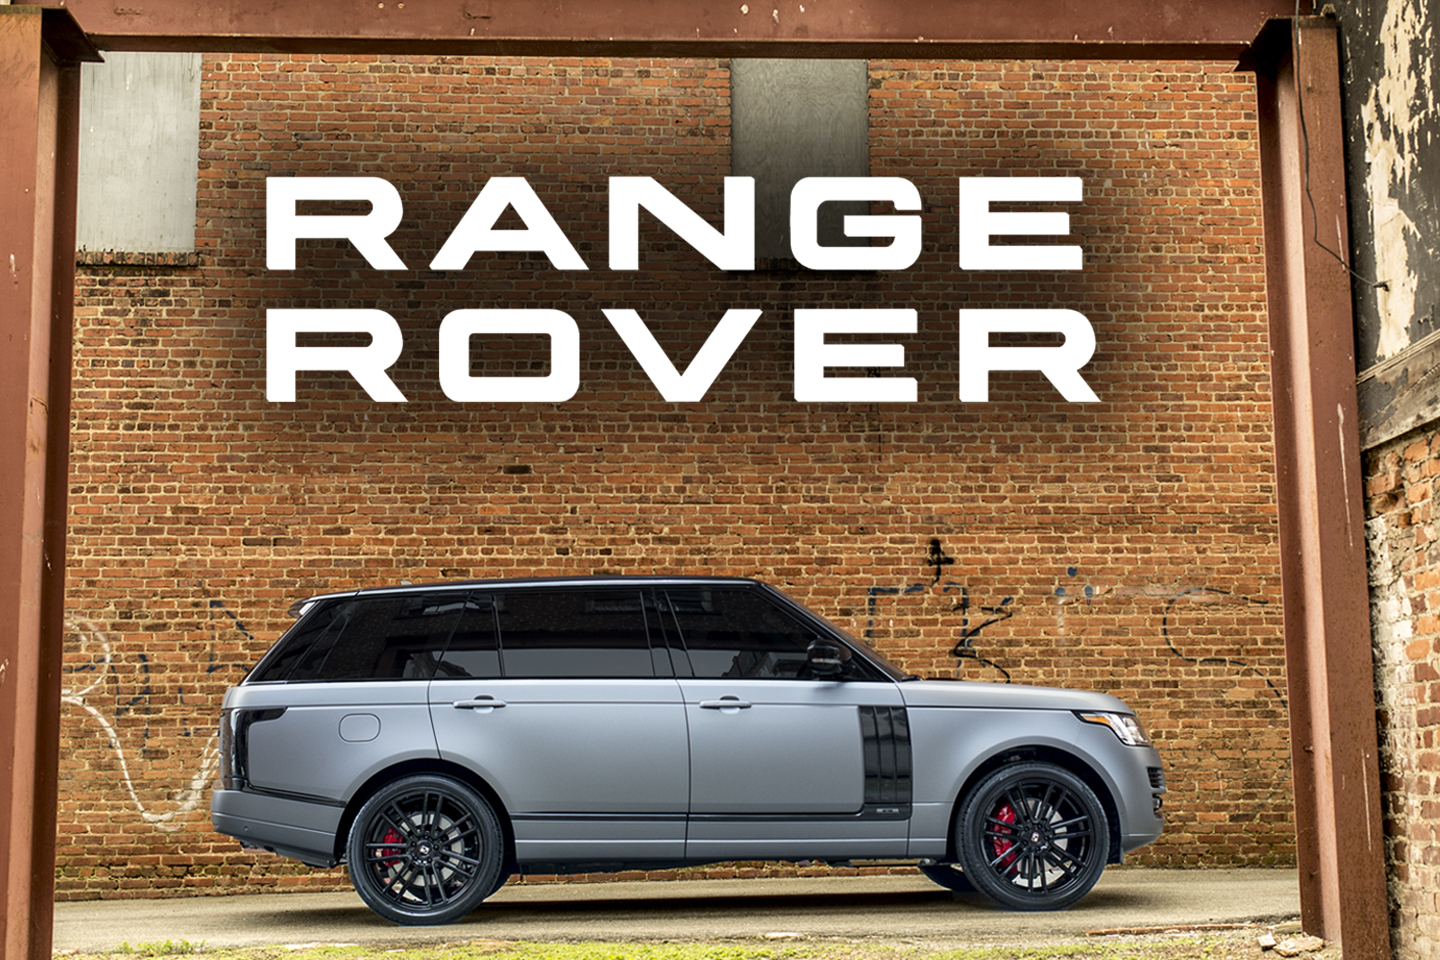 Range Rover Gallery